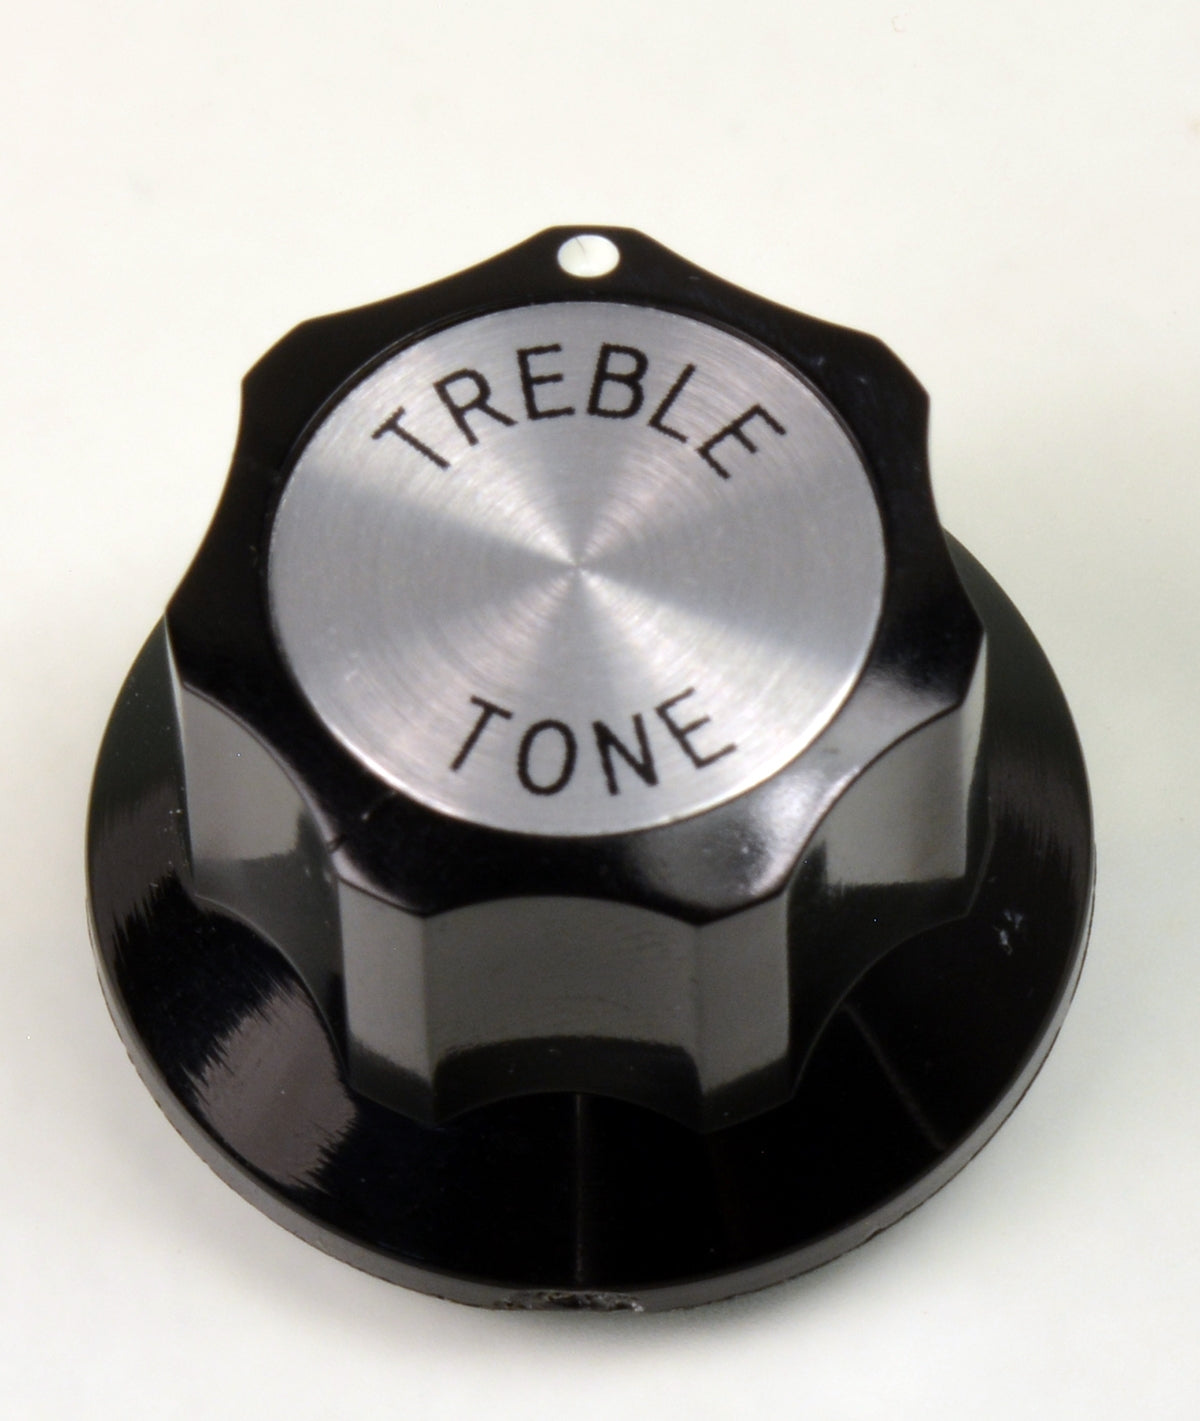 Rickenbacker® type treble tone knob METRIC size only